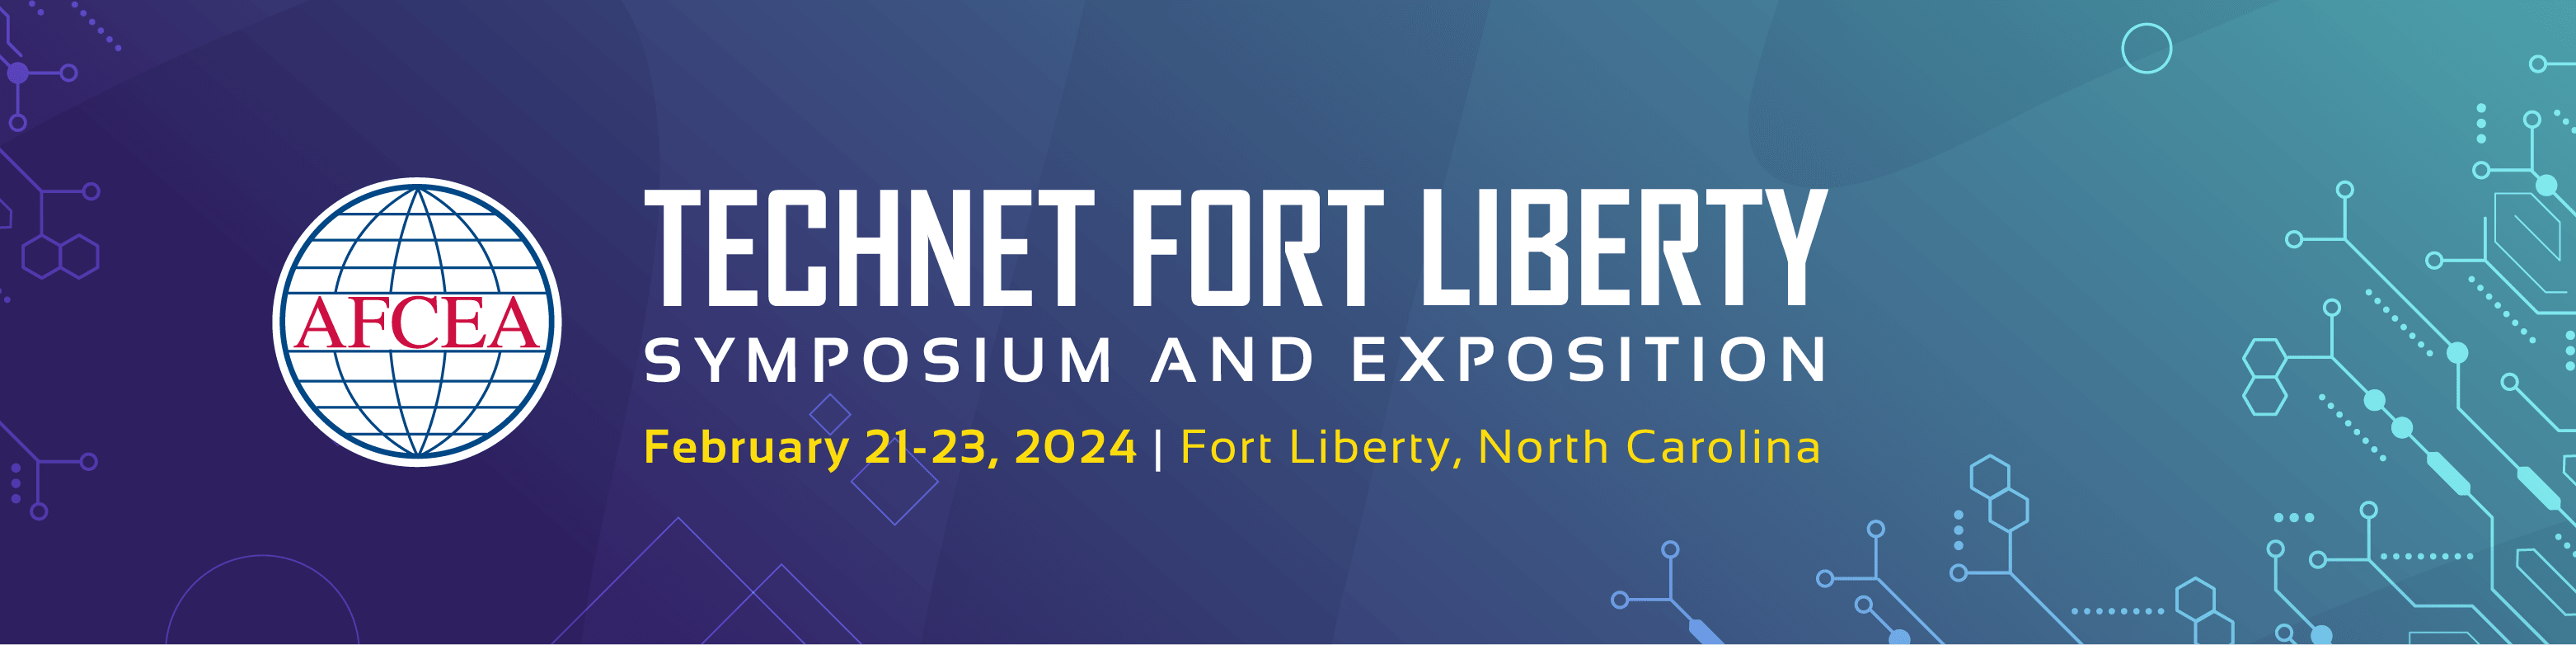 TechNet Fort Liberty Symposium & Exposition, Feb 21-23, 2024